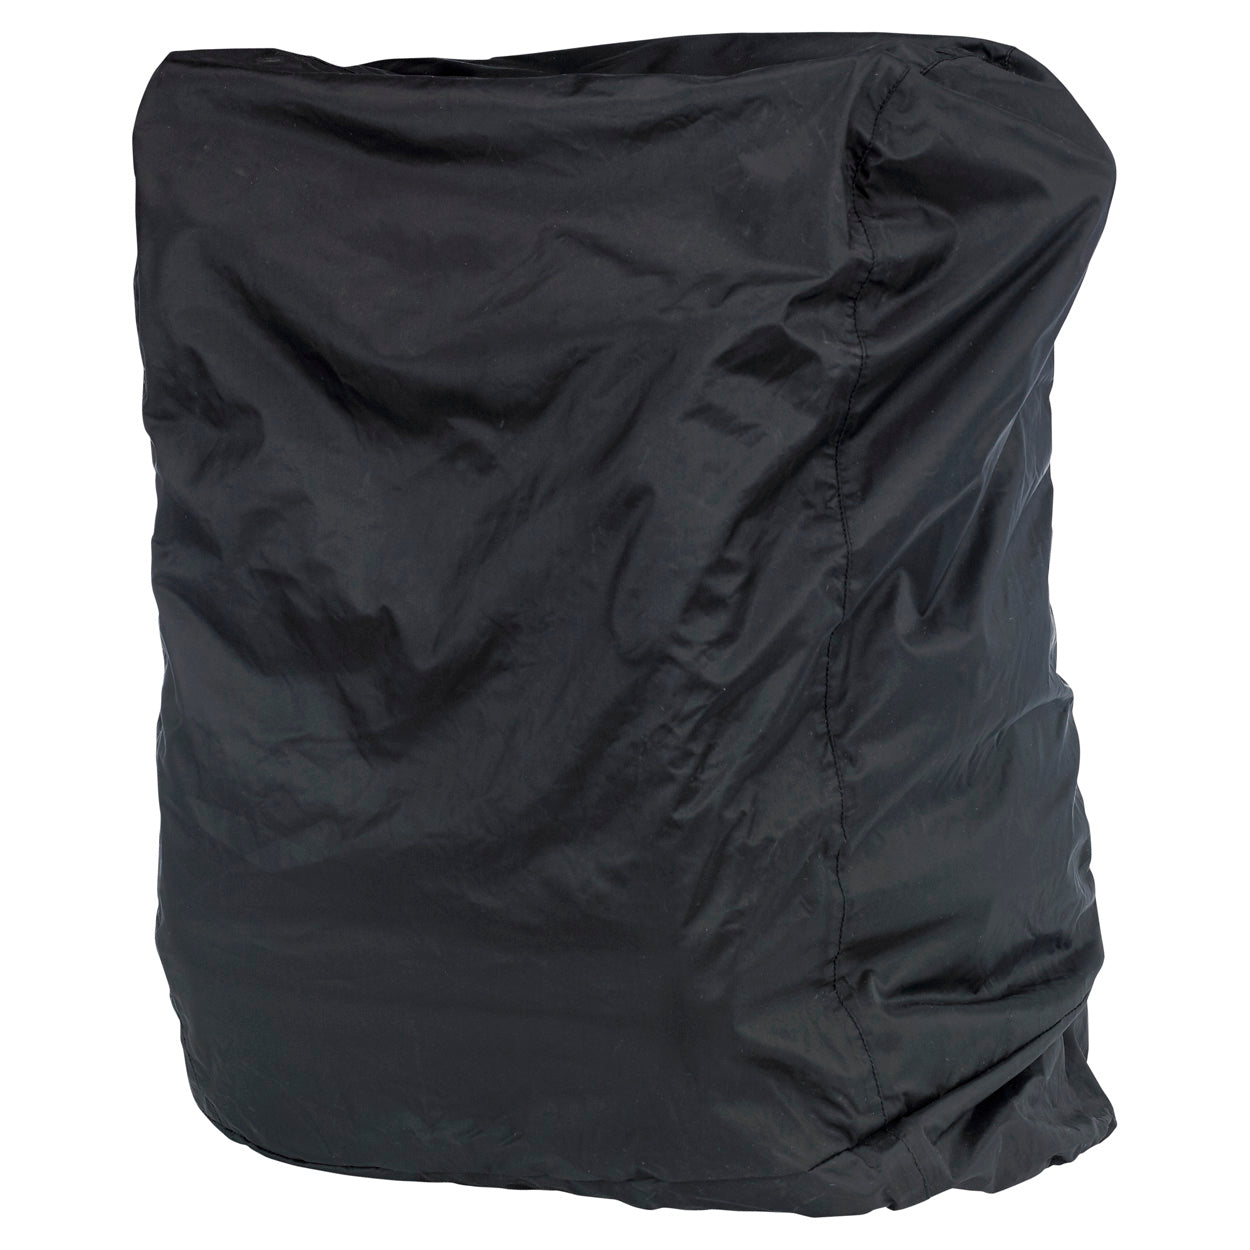 EXFIL-80 2.0 Sissy Bar Bag - Black